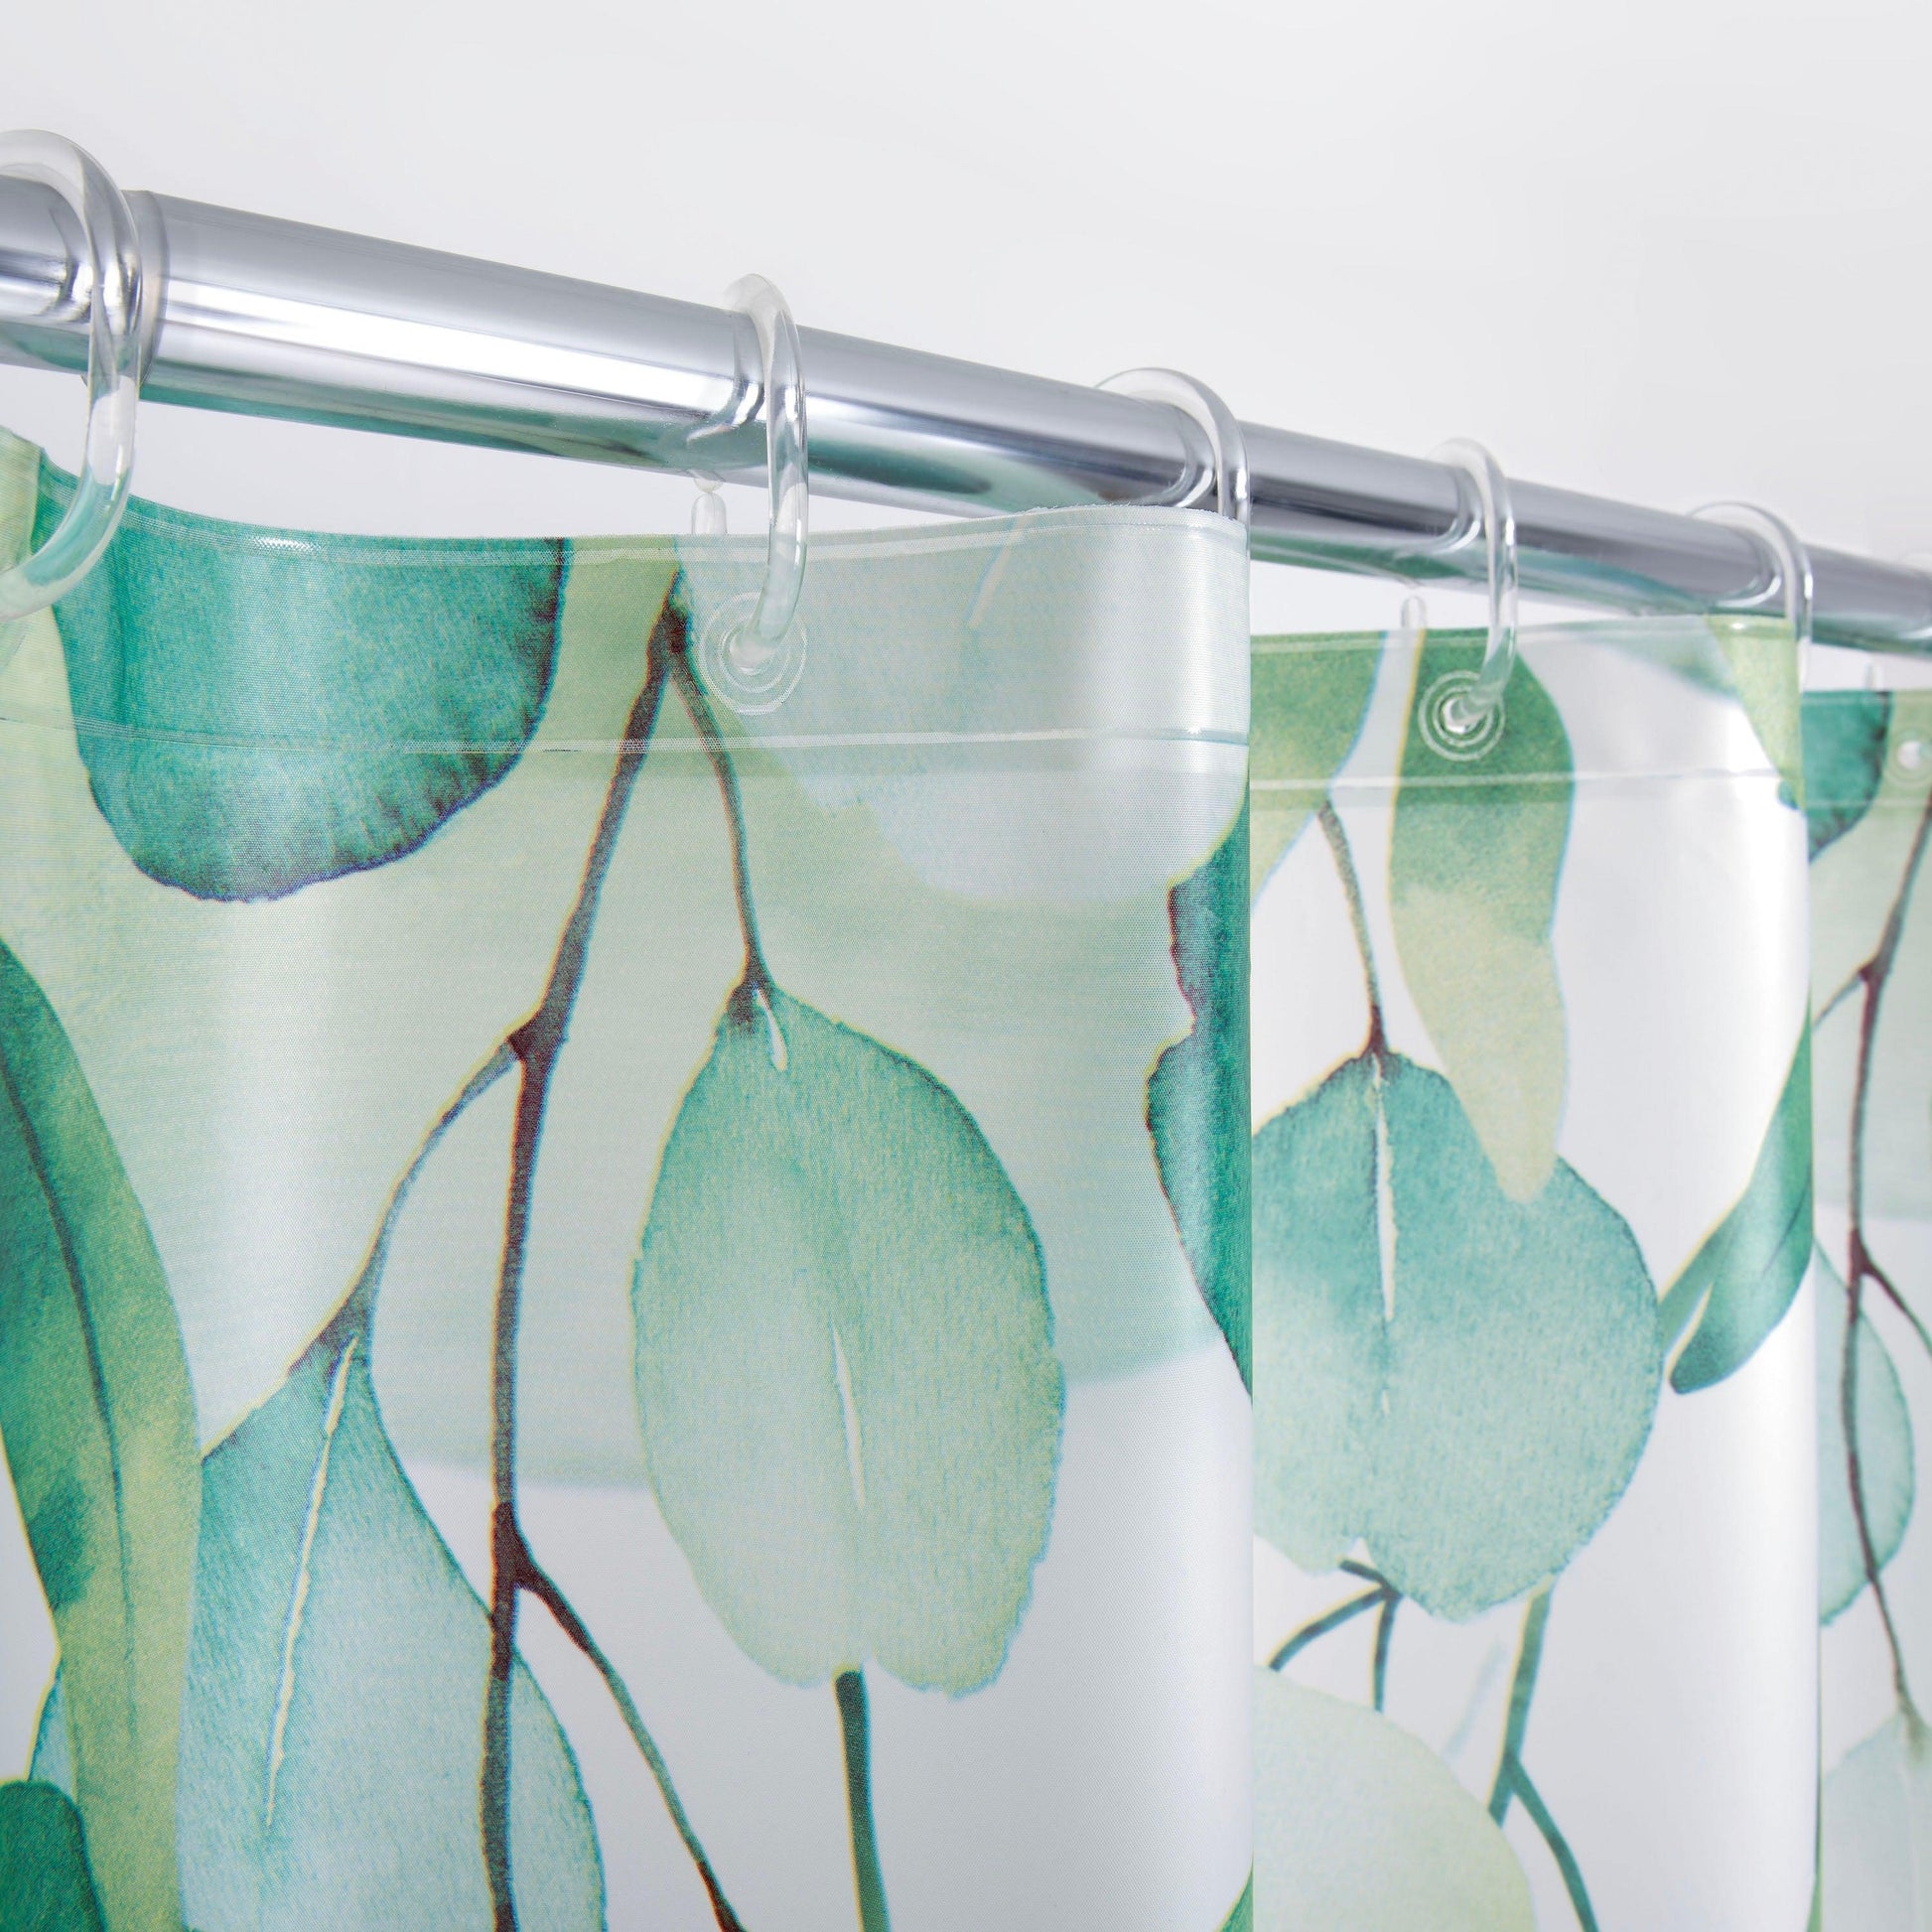 Vine & Leaf Botanical PEVA Shower Curtain - Allure Home Creation